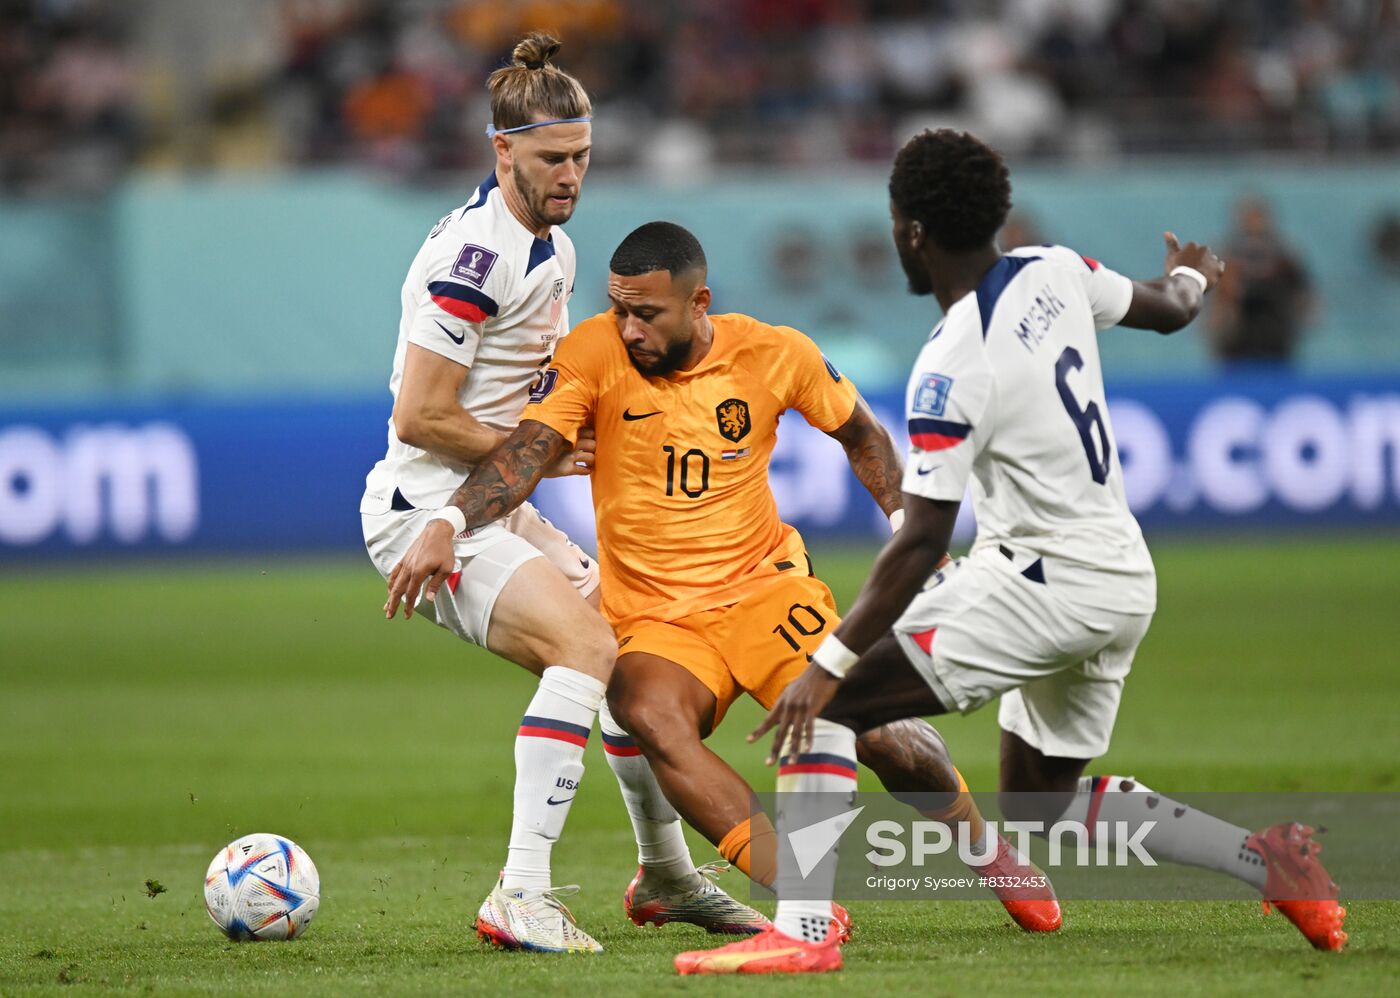 Qatar Soccer World Cup Netherlands - USA